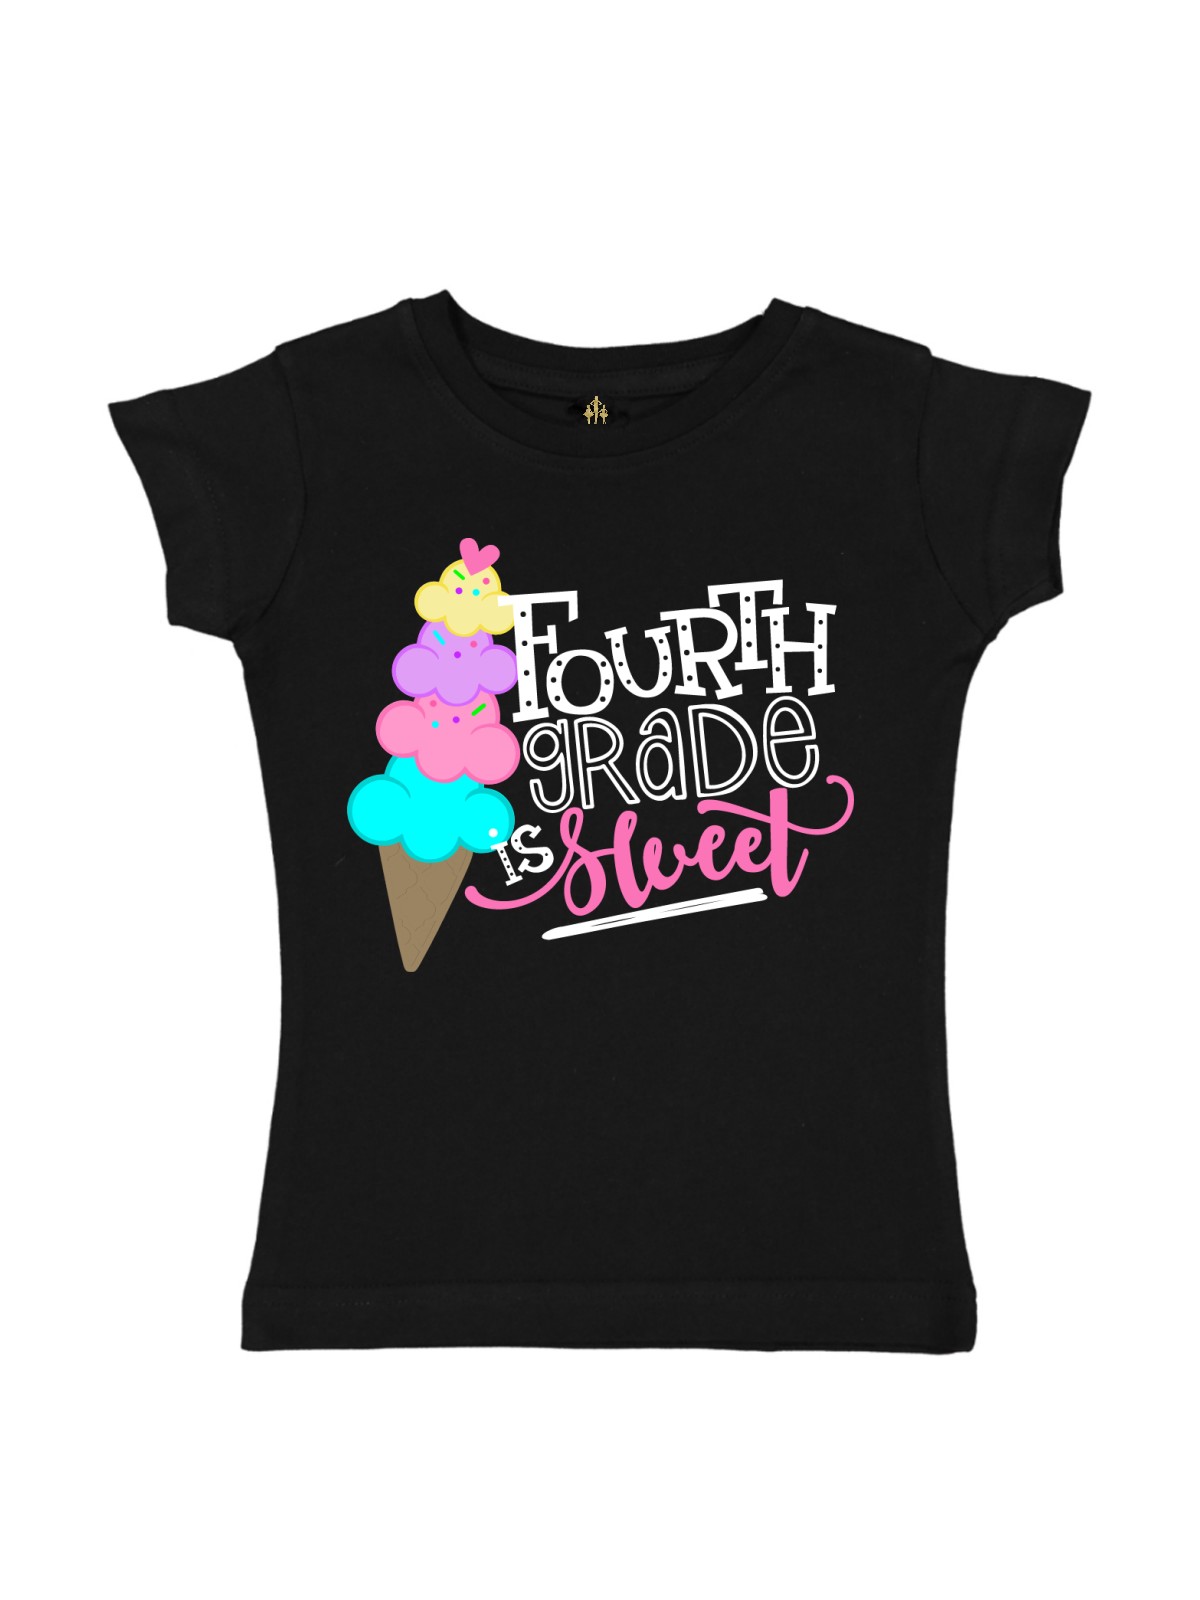 Fourth Grade is Sweet Girls Shirt in Black